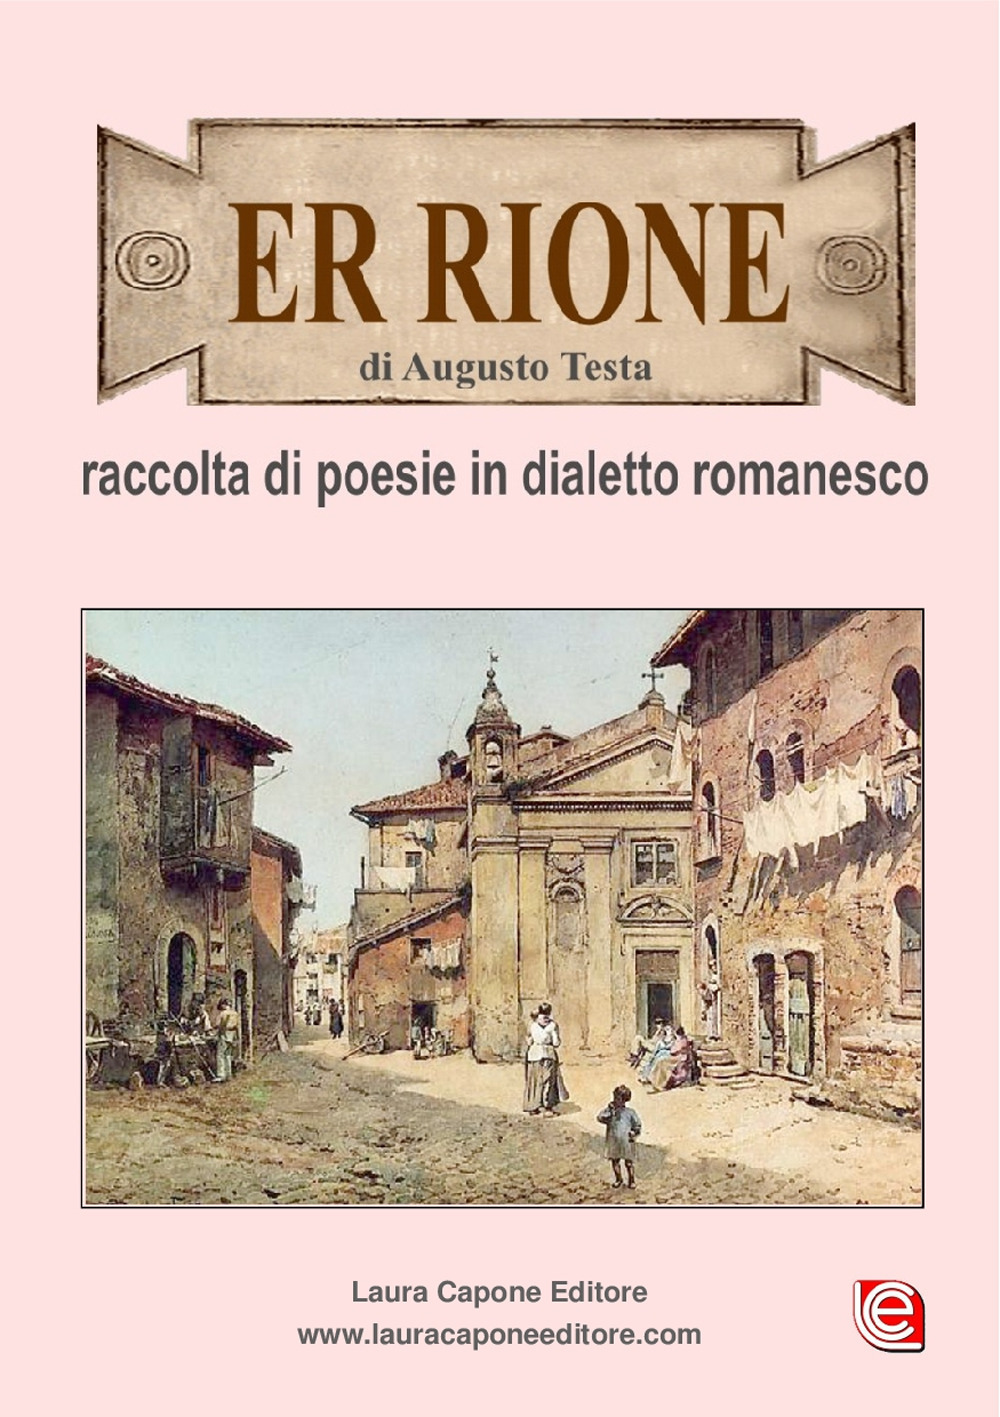 Poesie: “Er Rione” di Augusto Testa